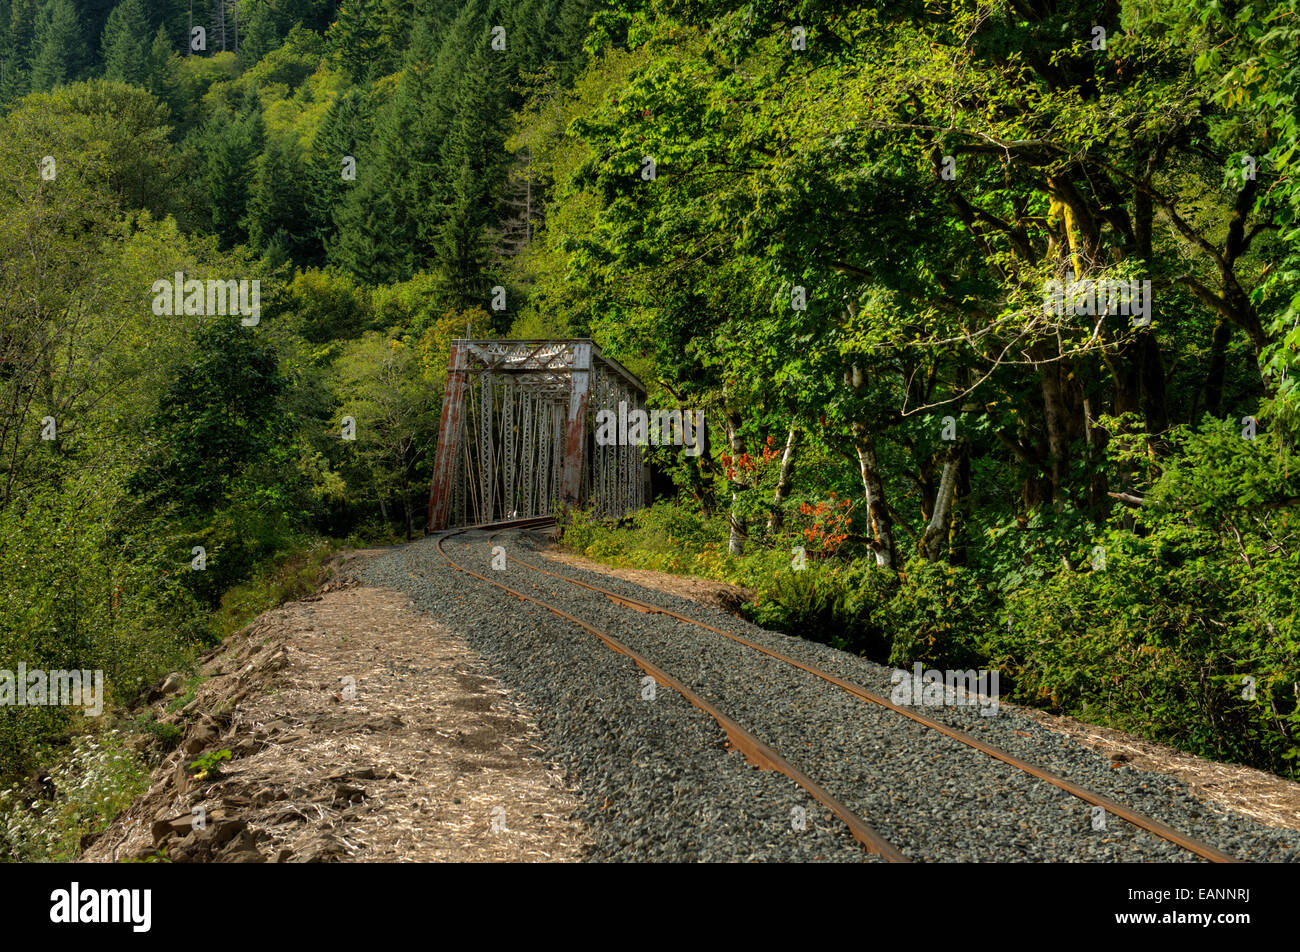 The old Port Of Tillamook Bay Railroad bridge over the Nehalem River at Salmonberry Stock Photo